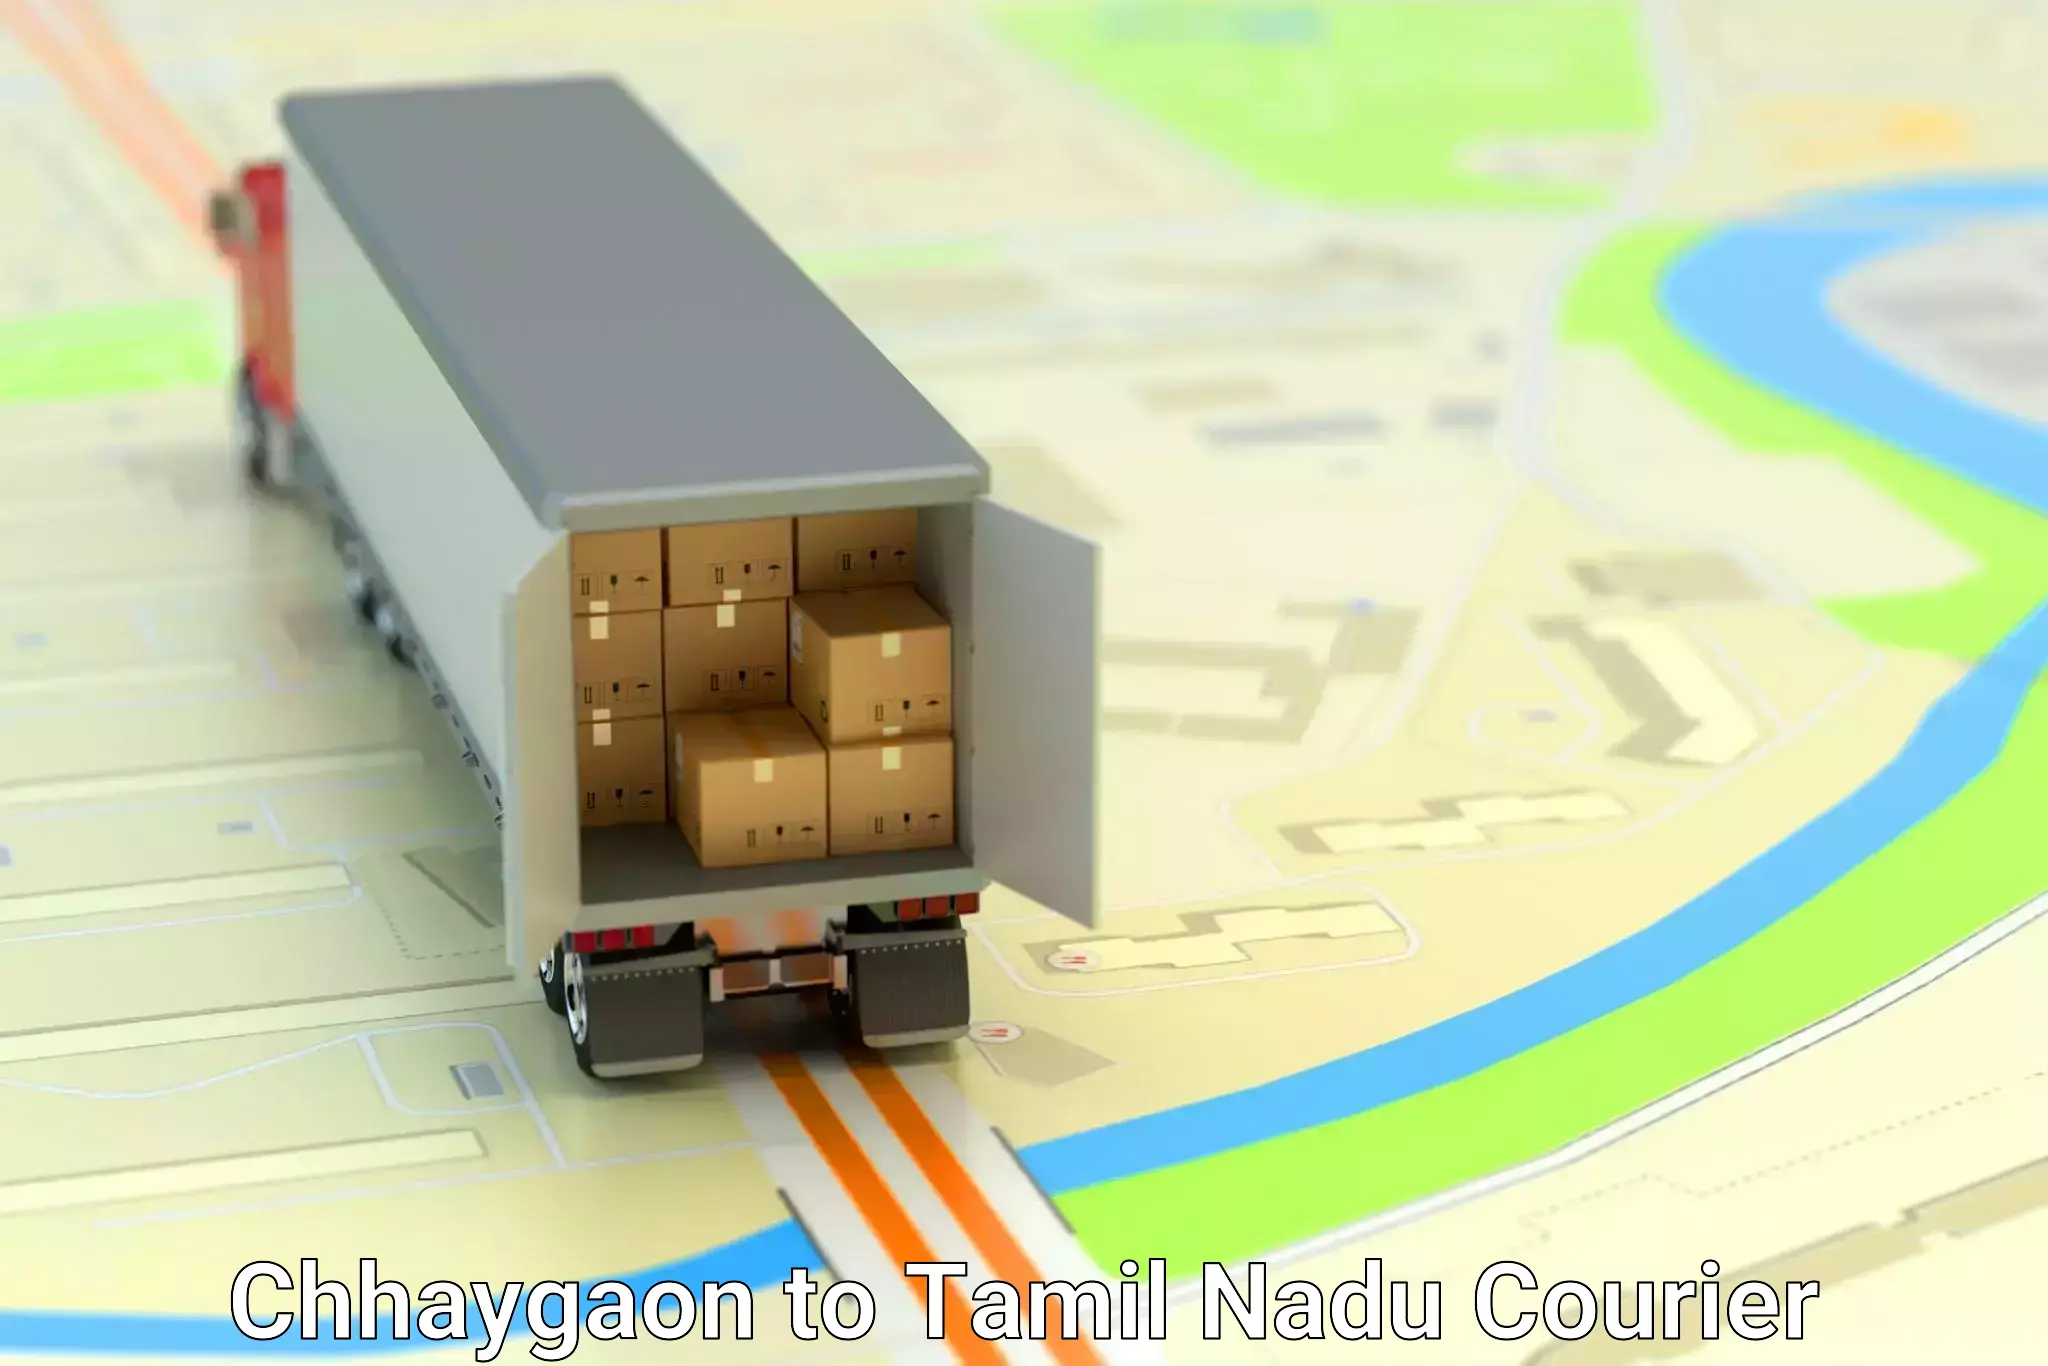 Efficient freight transportation Chhaygaon to Kotagiri